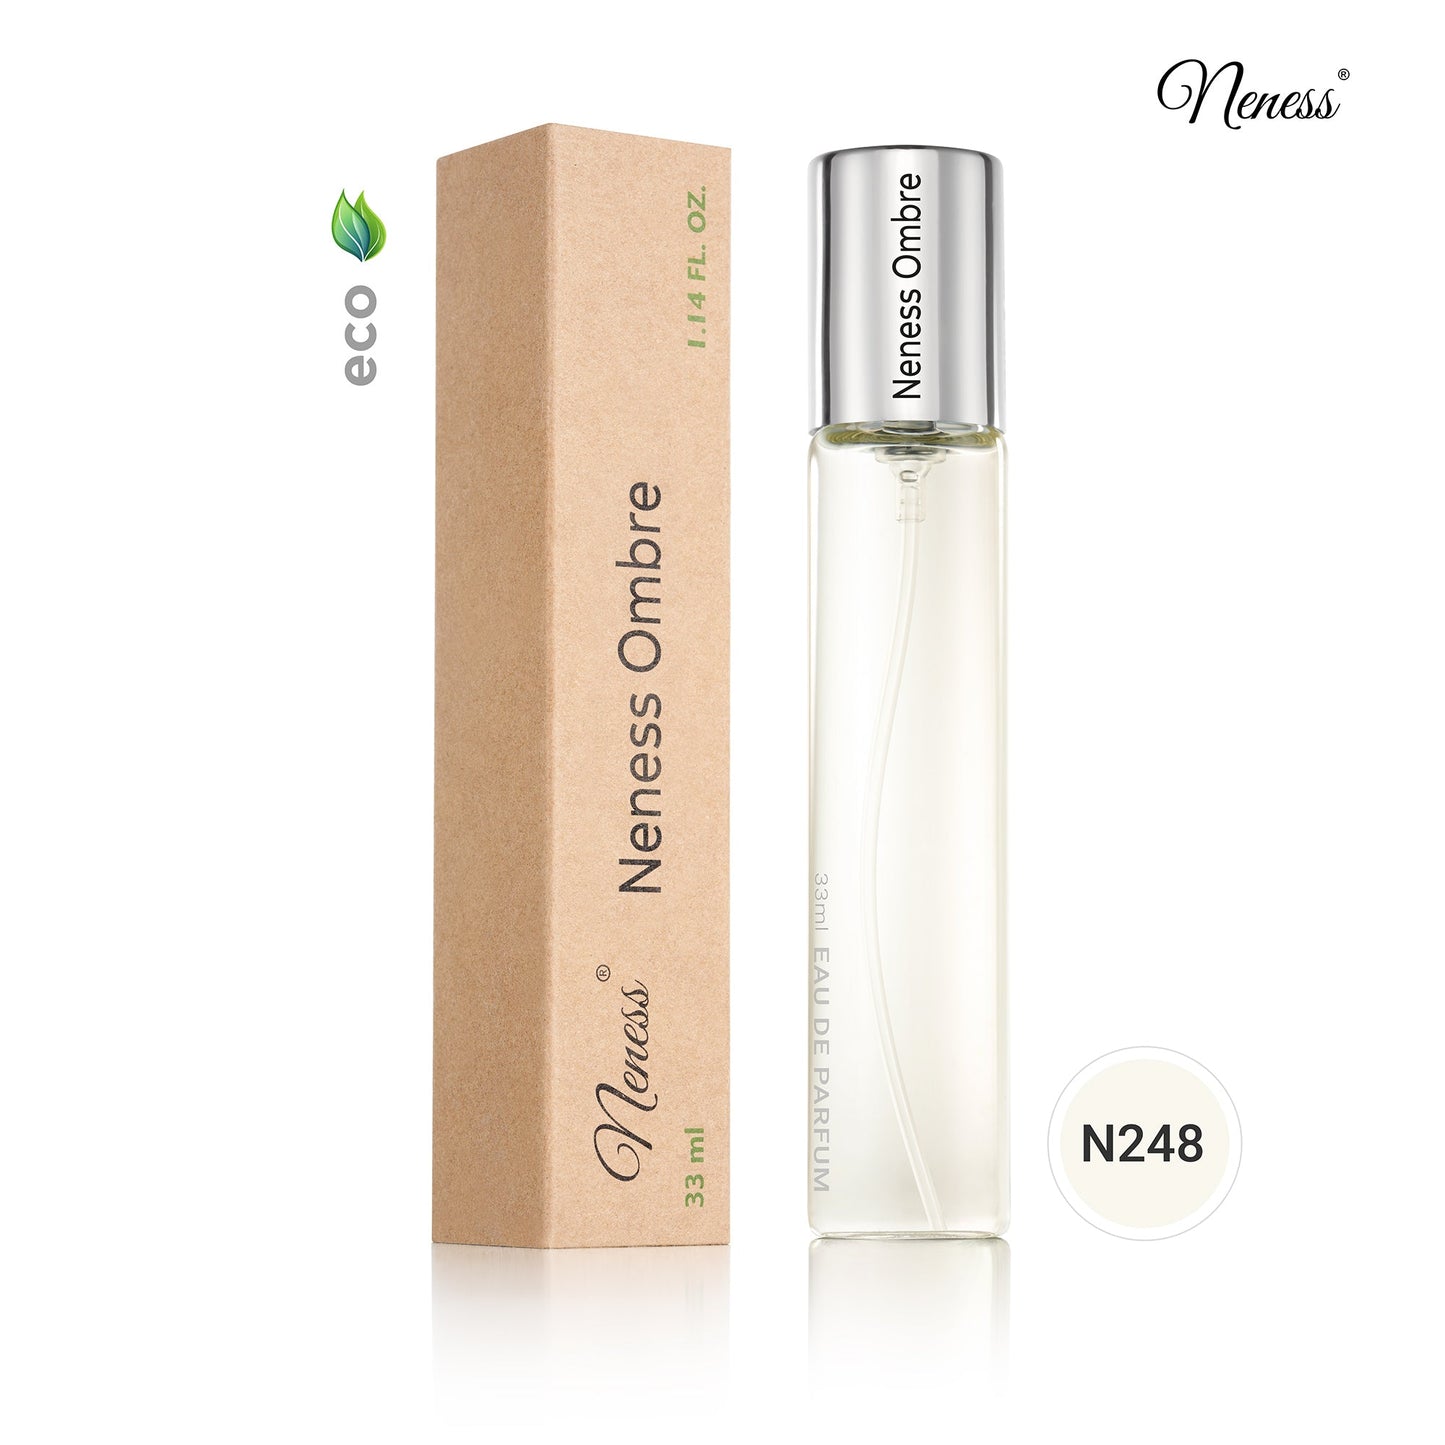 N248. Neness Ombre - 33 ml - Parfums unisexes